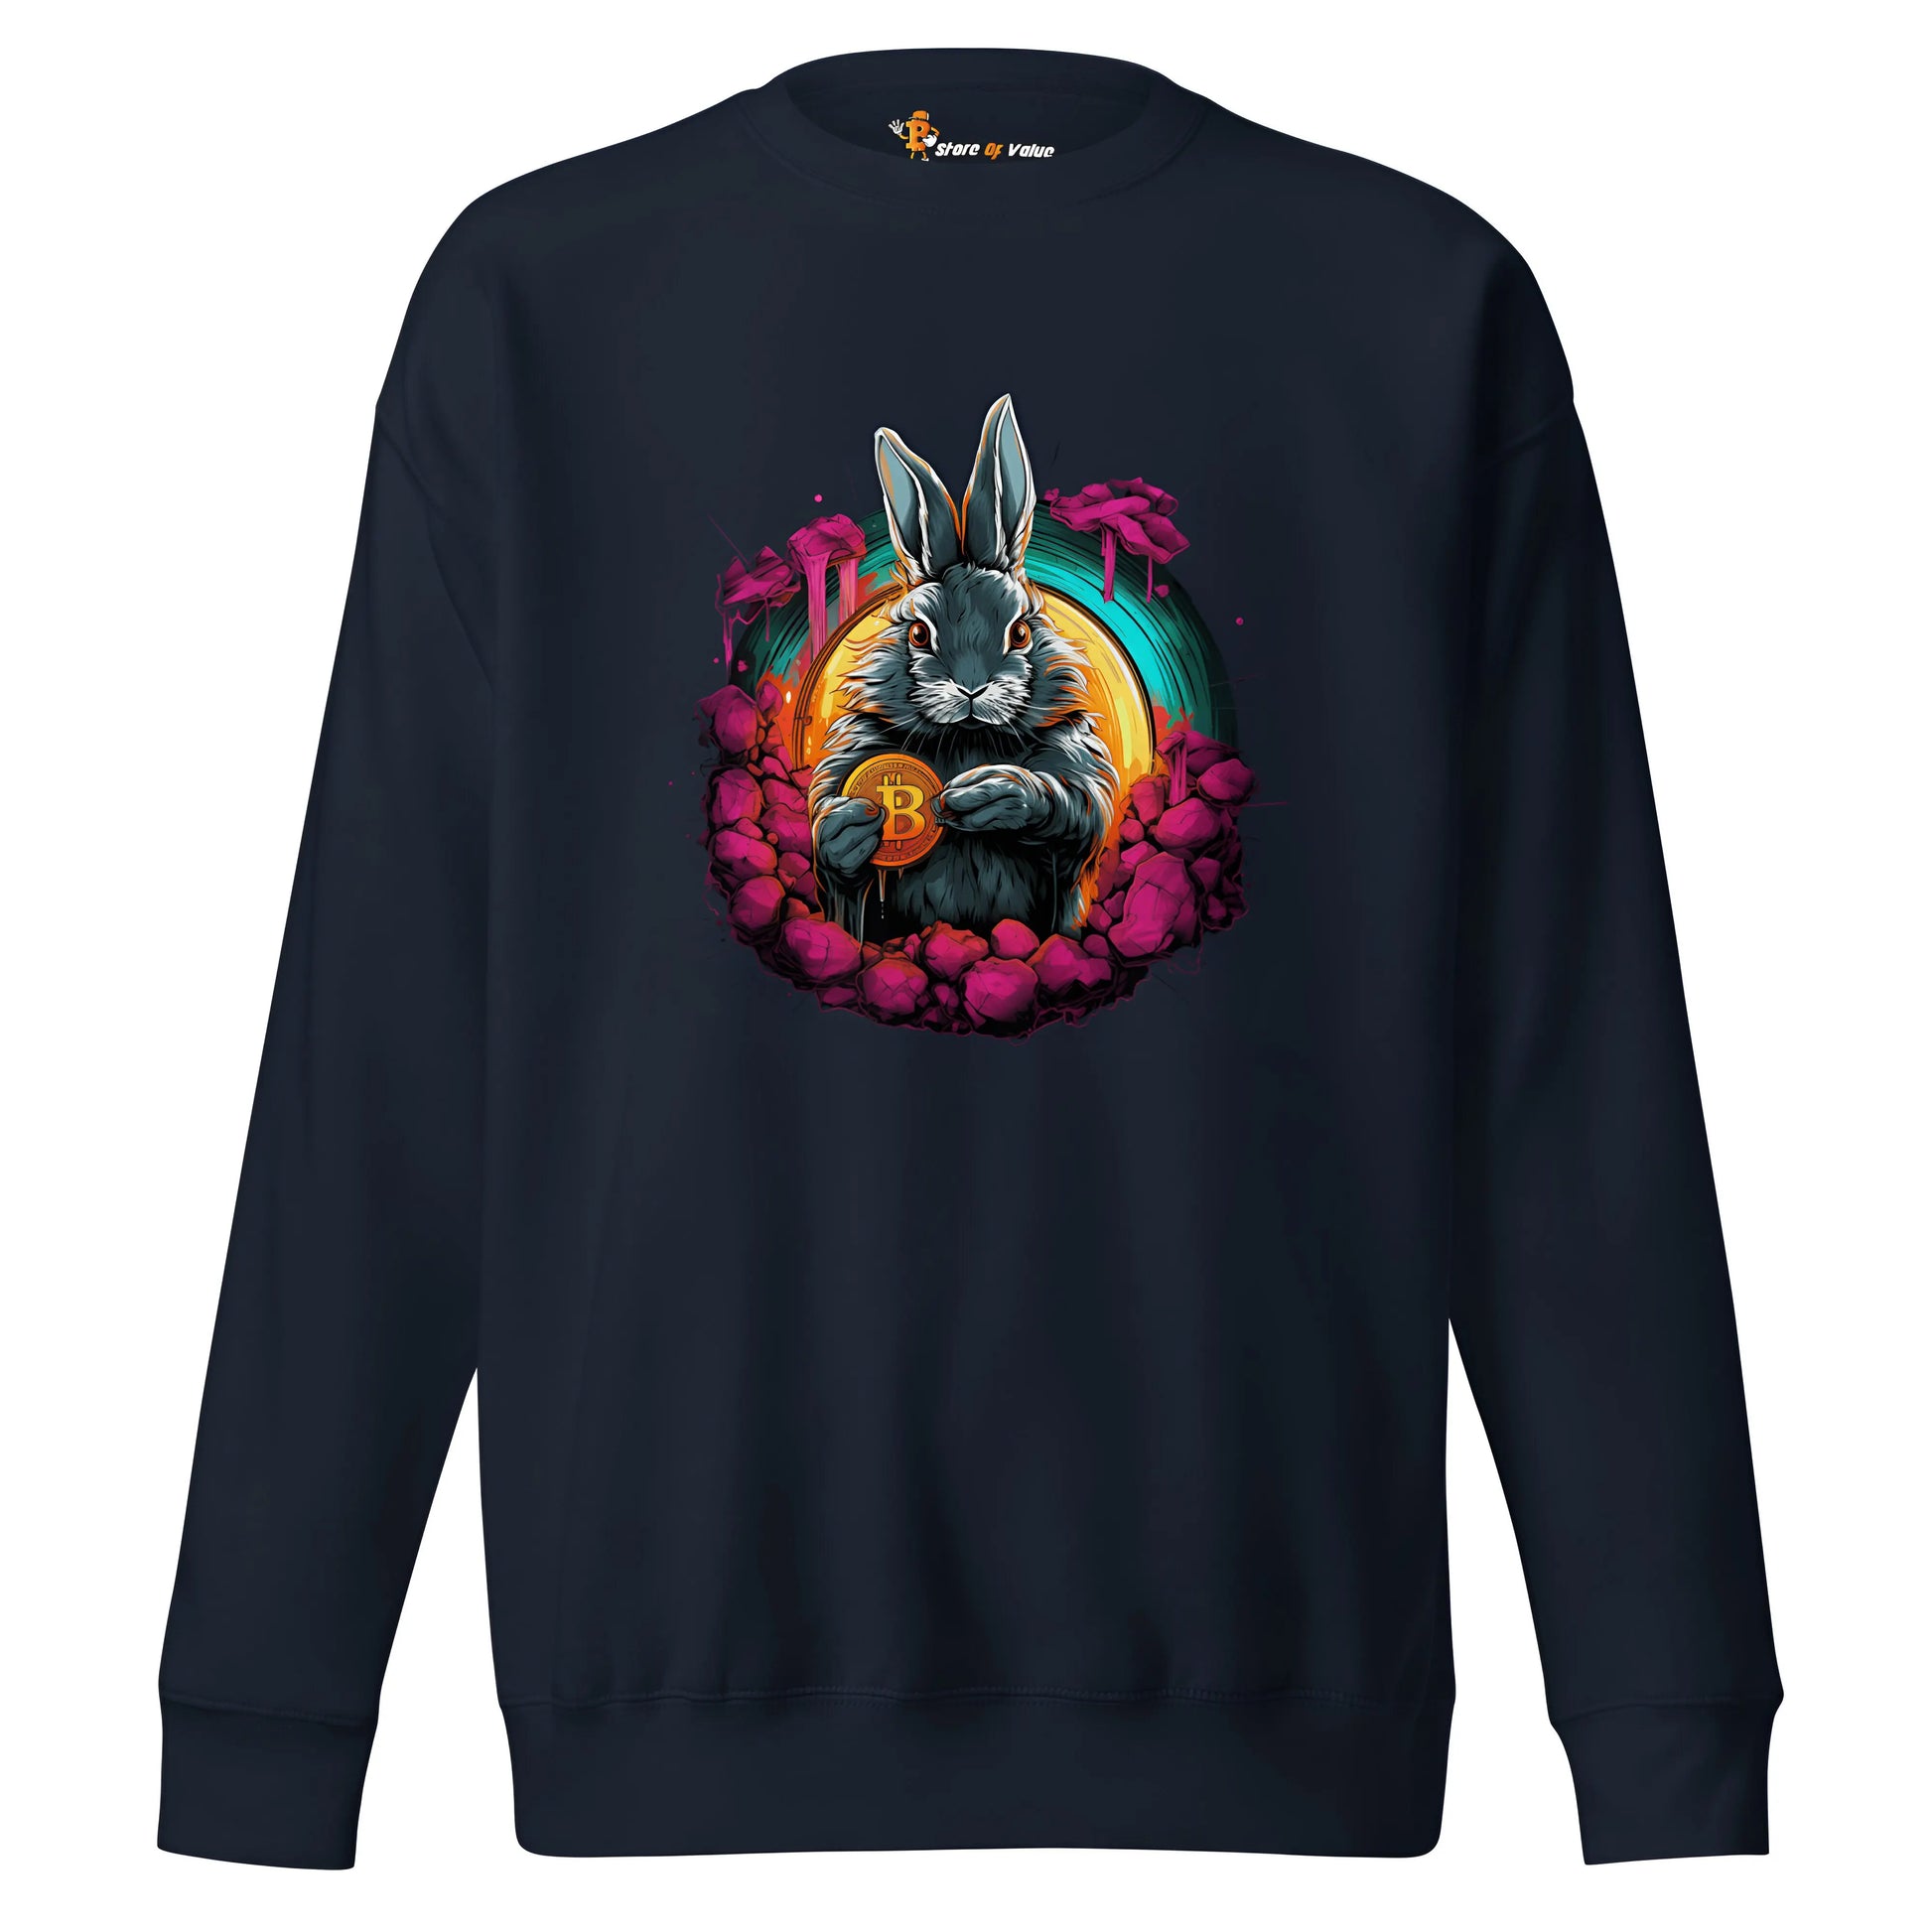 The Bitcoin Rabbit Hole - Premium Unisex Bitcoin Sweatshirt Navy Color